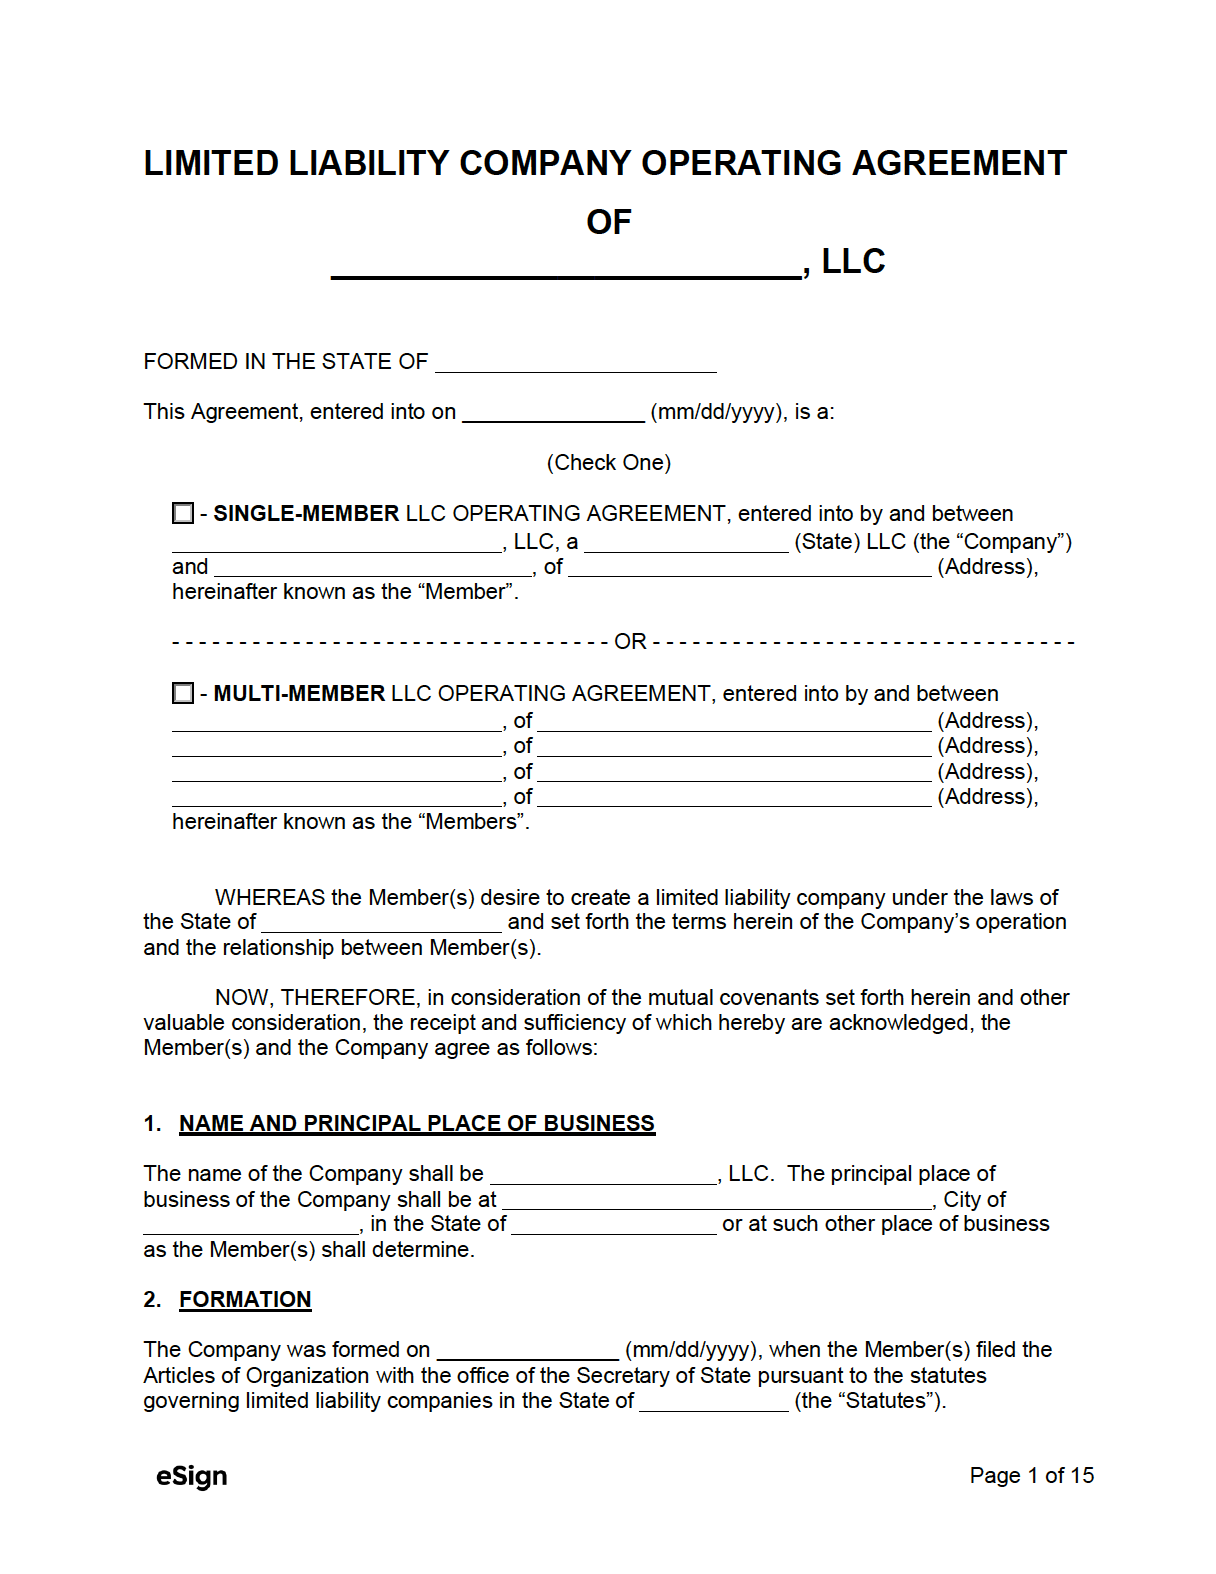 llc operating agreement template